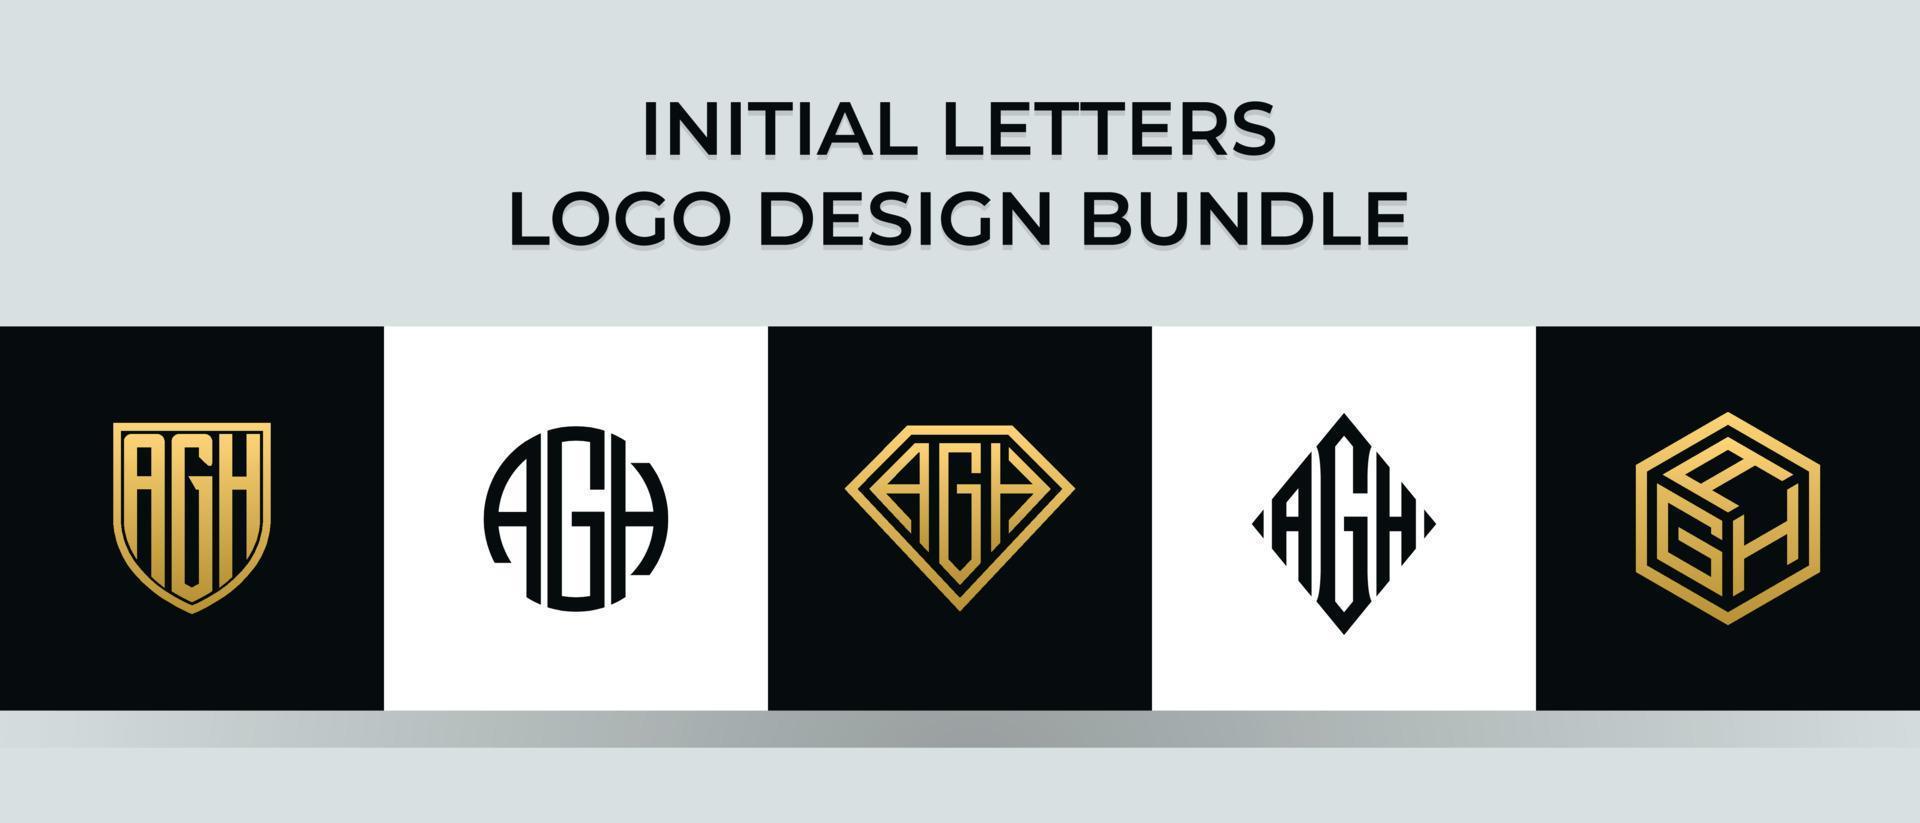 beginletters agh logo ontwerpen bundel vector